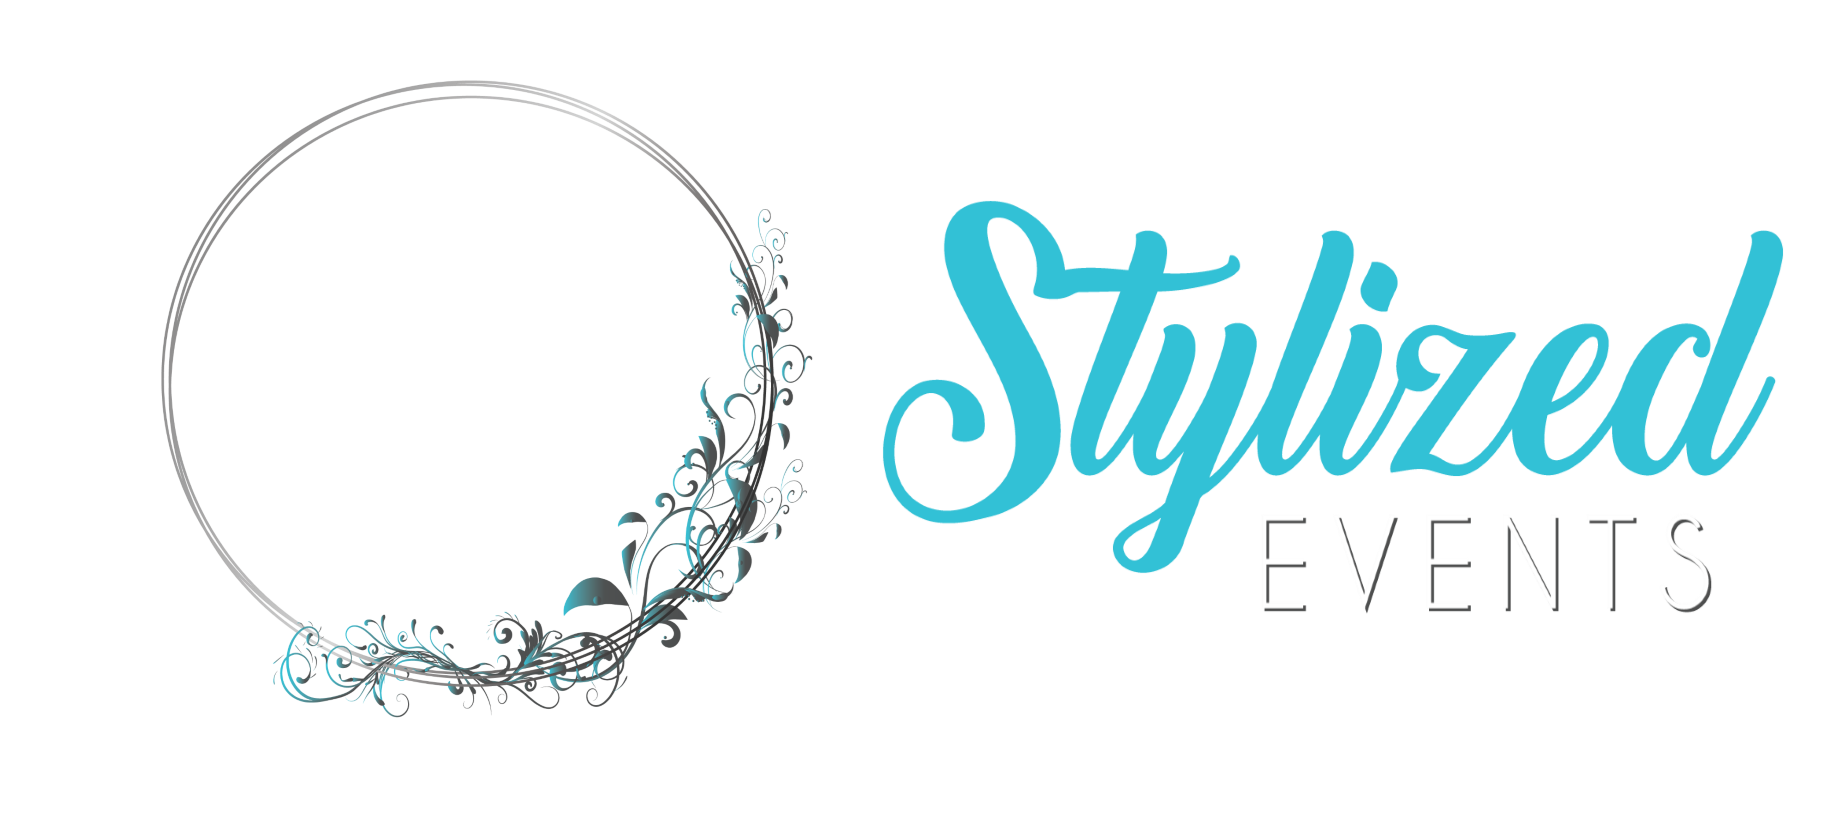 Stylized_Events_Horizontal_Logo_2.png